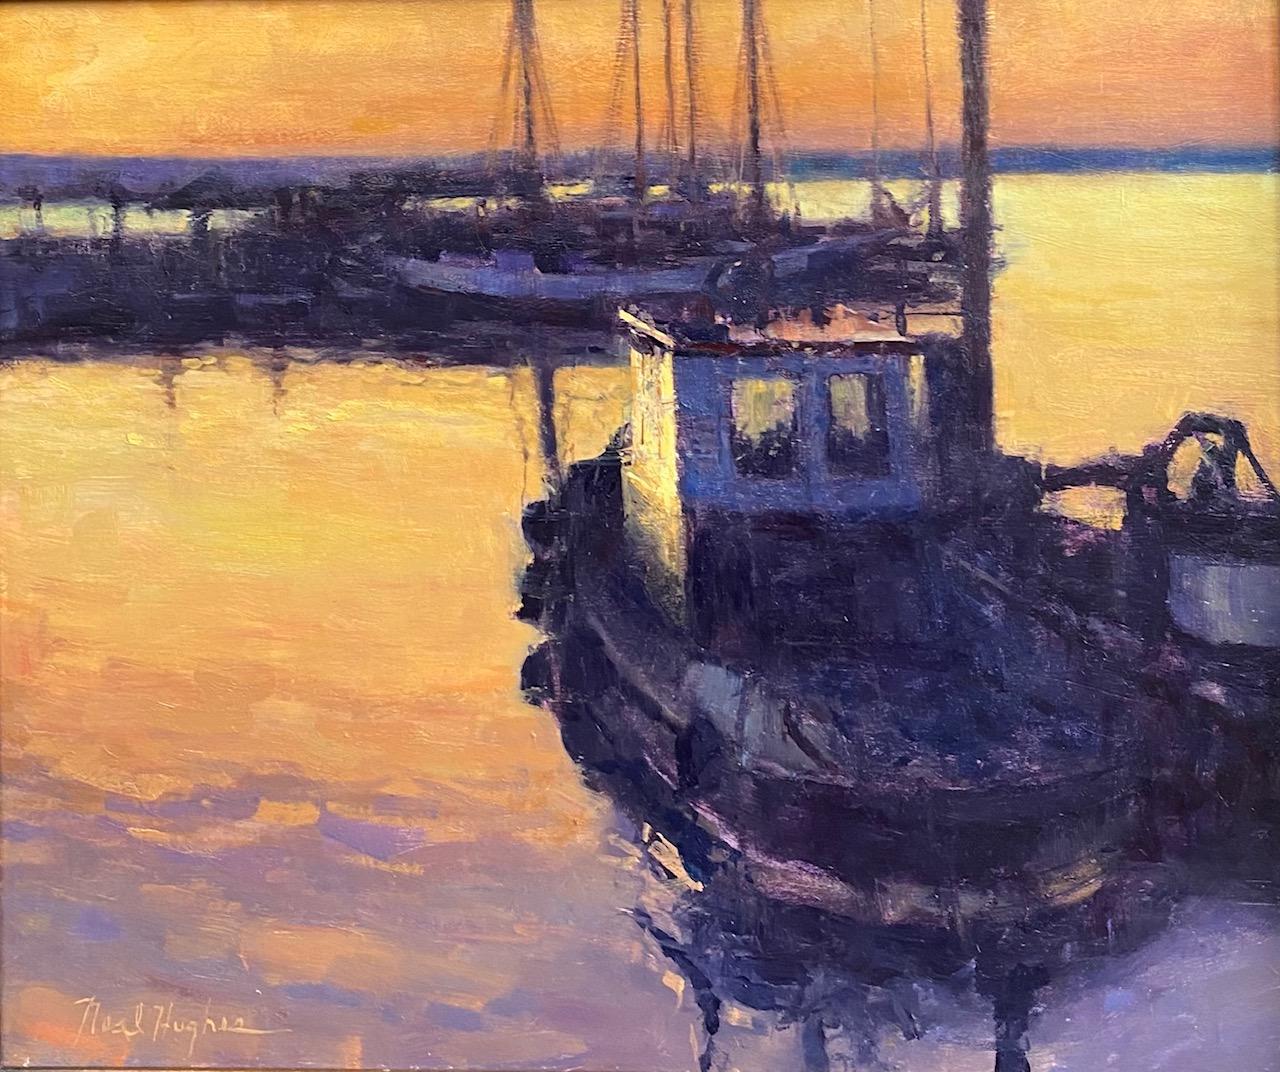 Sunrise Tug, paysage marin nocturne réaliste original et impressionniste - Painting de Neal Hughes